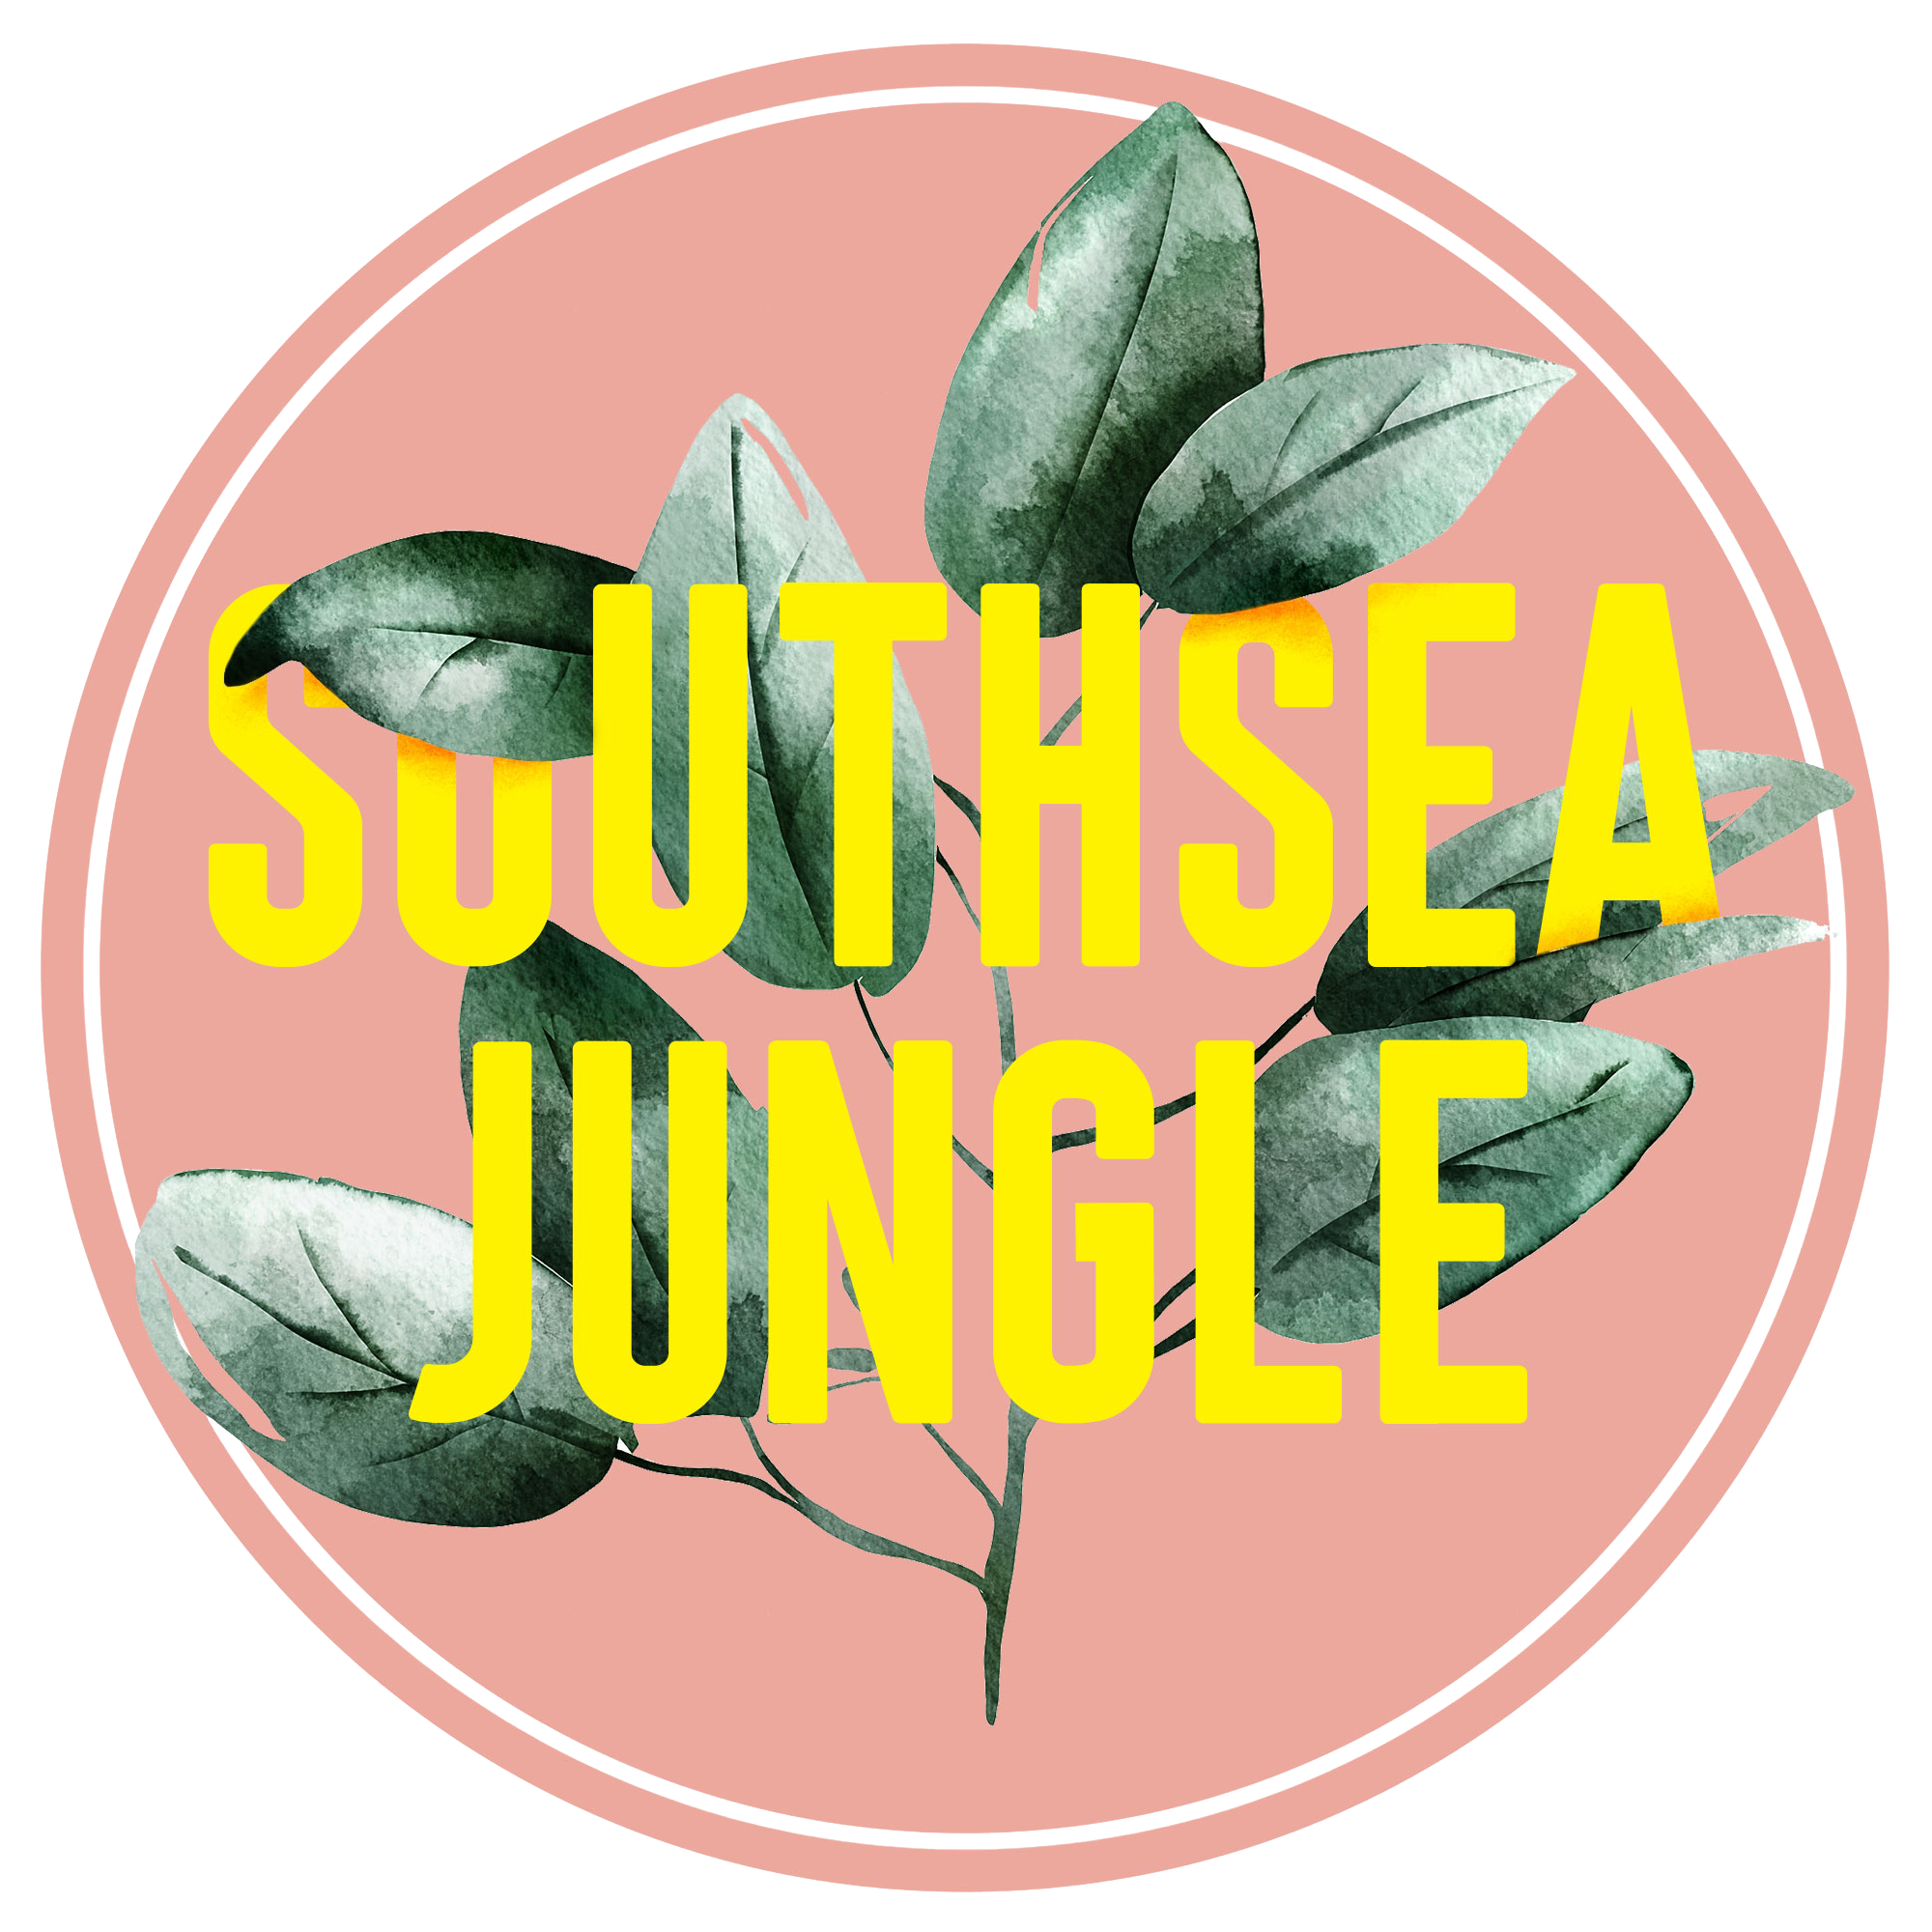 Southsea Jungle